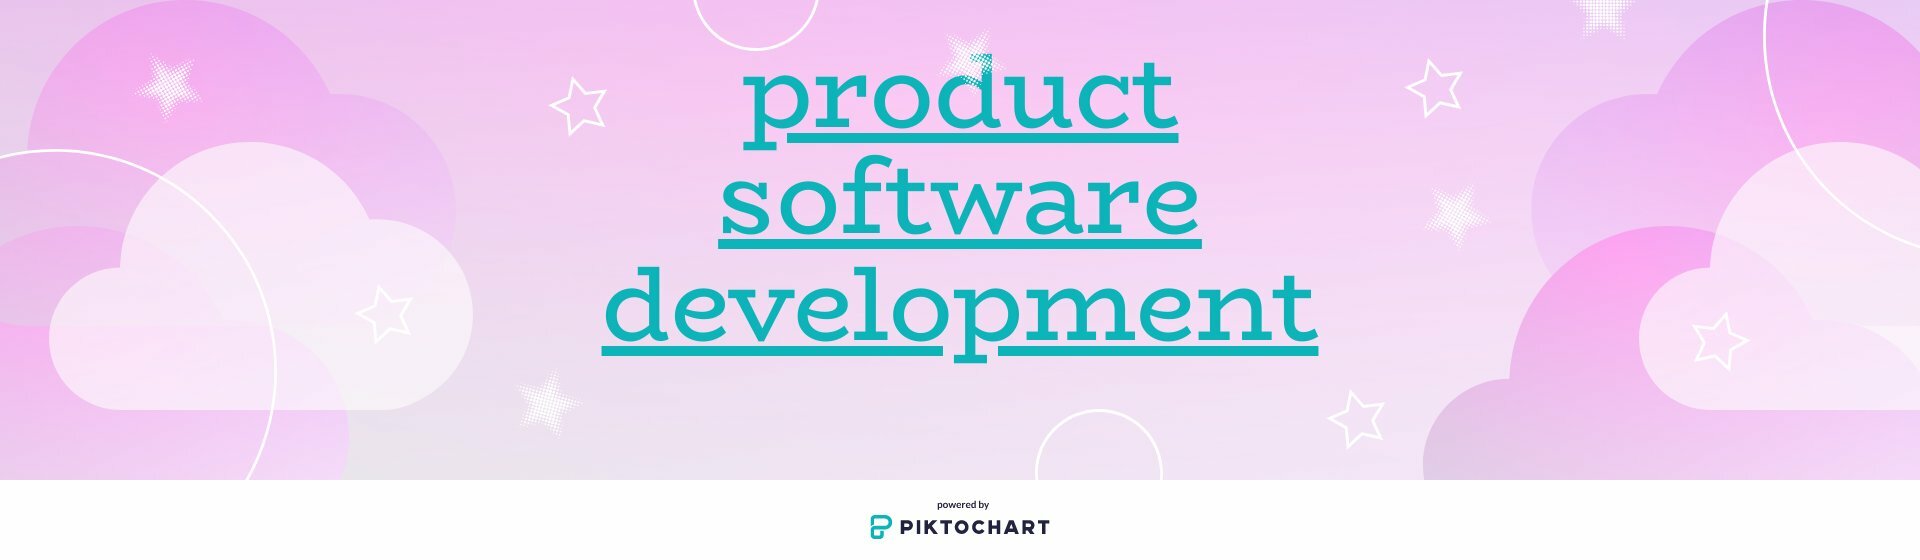 product software development | Piktochart Visual Editor